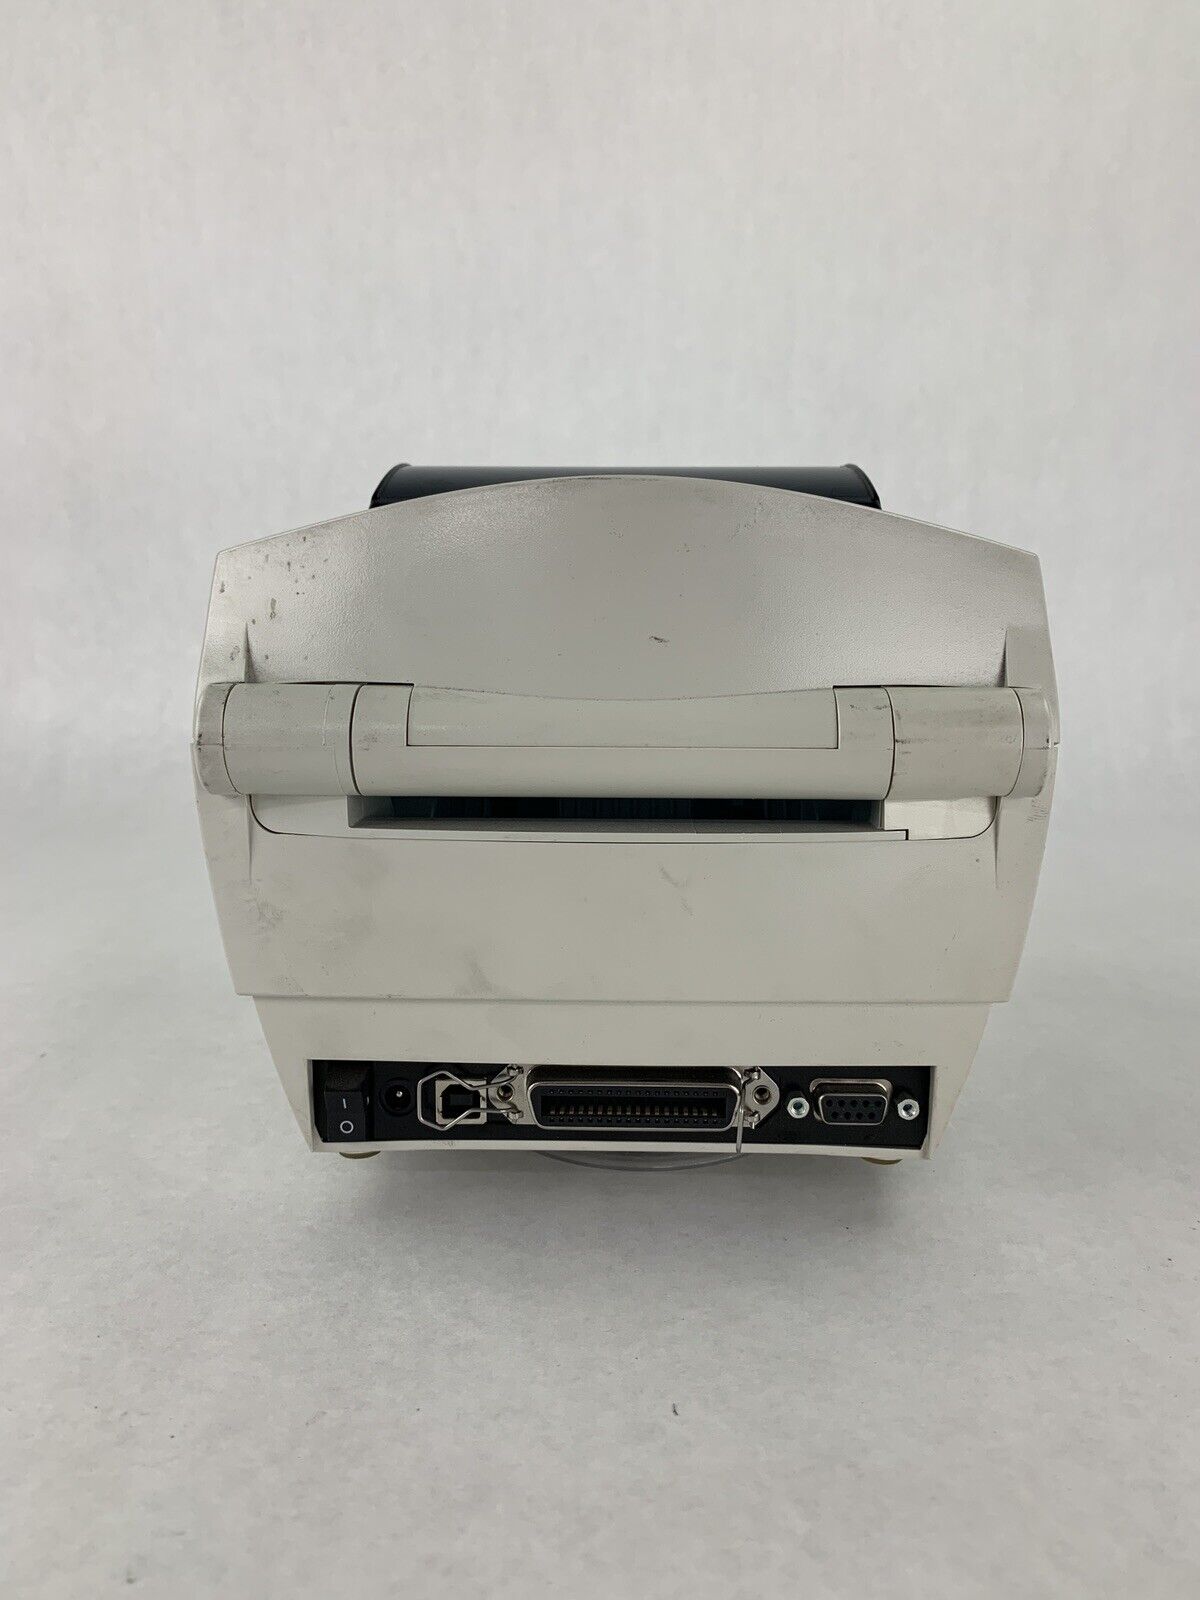 Zebra GC420D Direct USB Serial Label Printer Tested Bad Parallel Port Parts